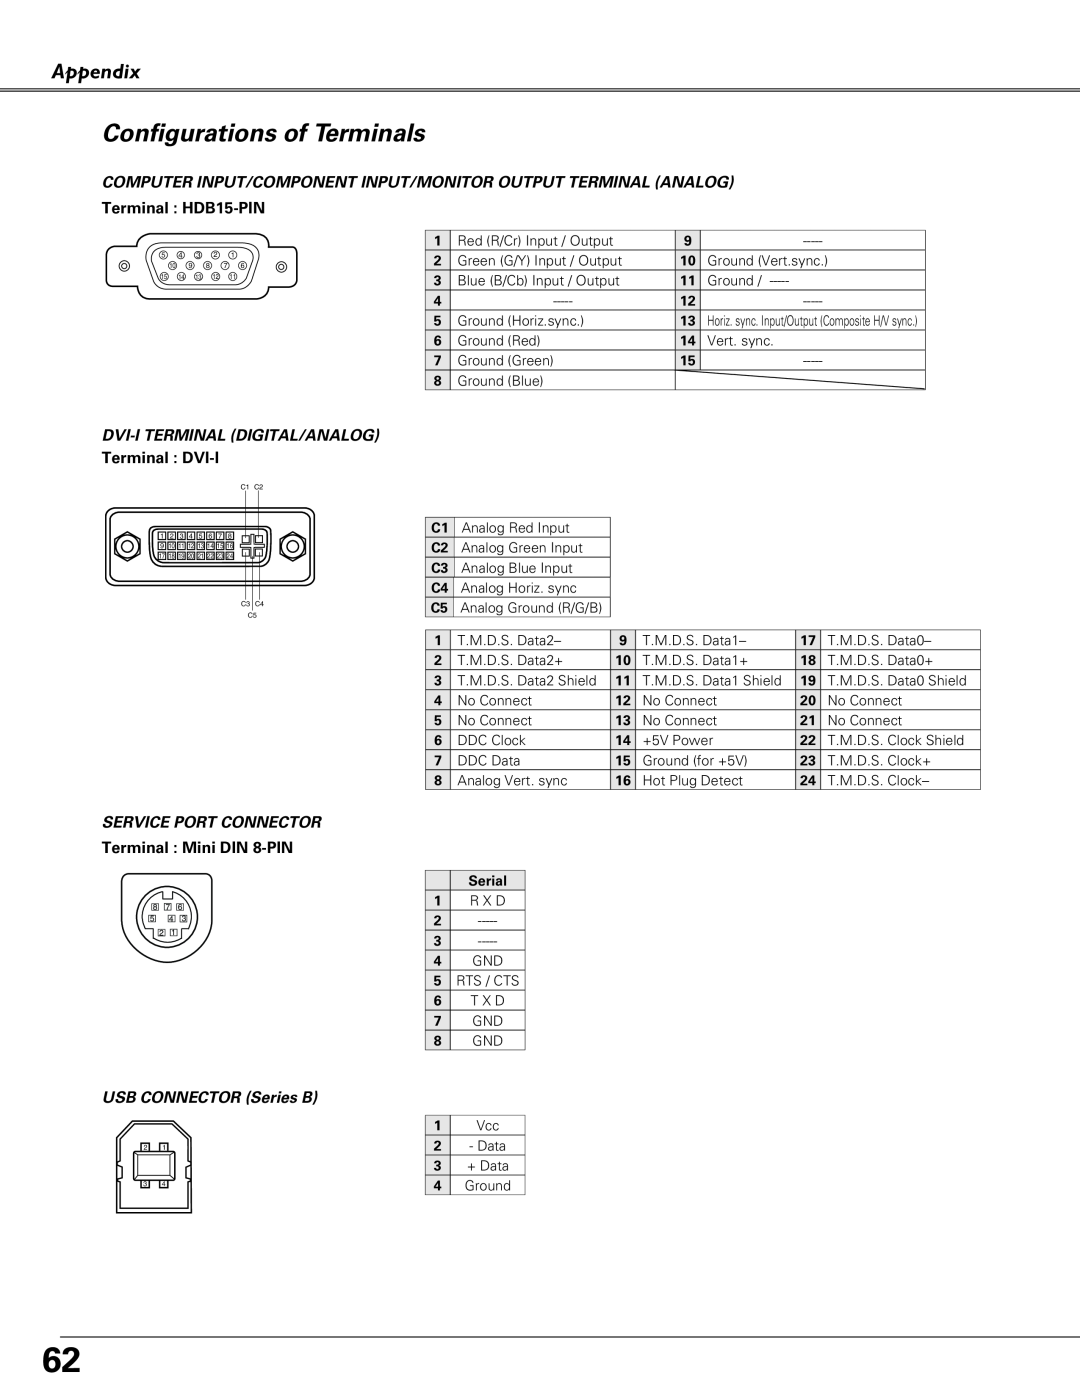 Eiki LC-SB21 Configurations of Terminals, Appendix, Terminal HDB15-PIN, Dvi-Iterminal Digital/Analog, Terminal DVI-I 